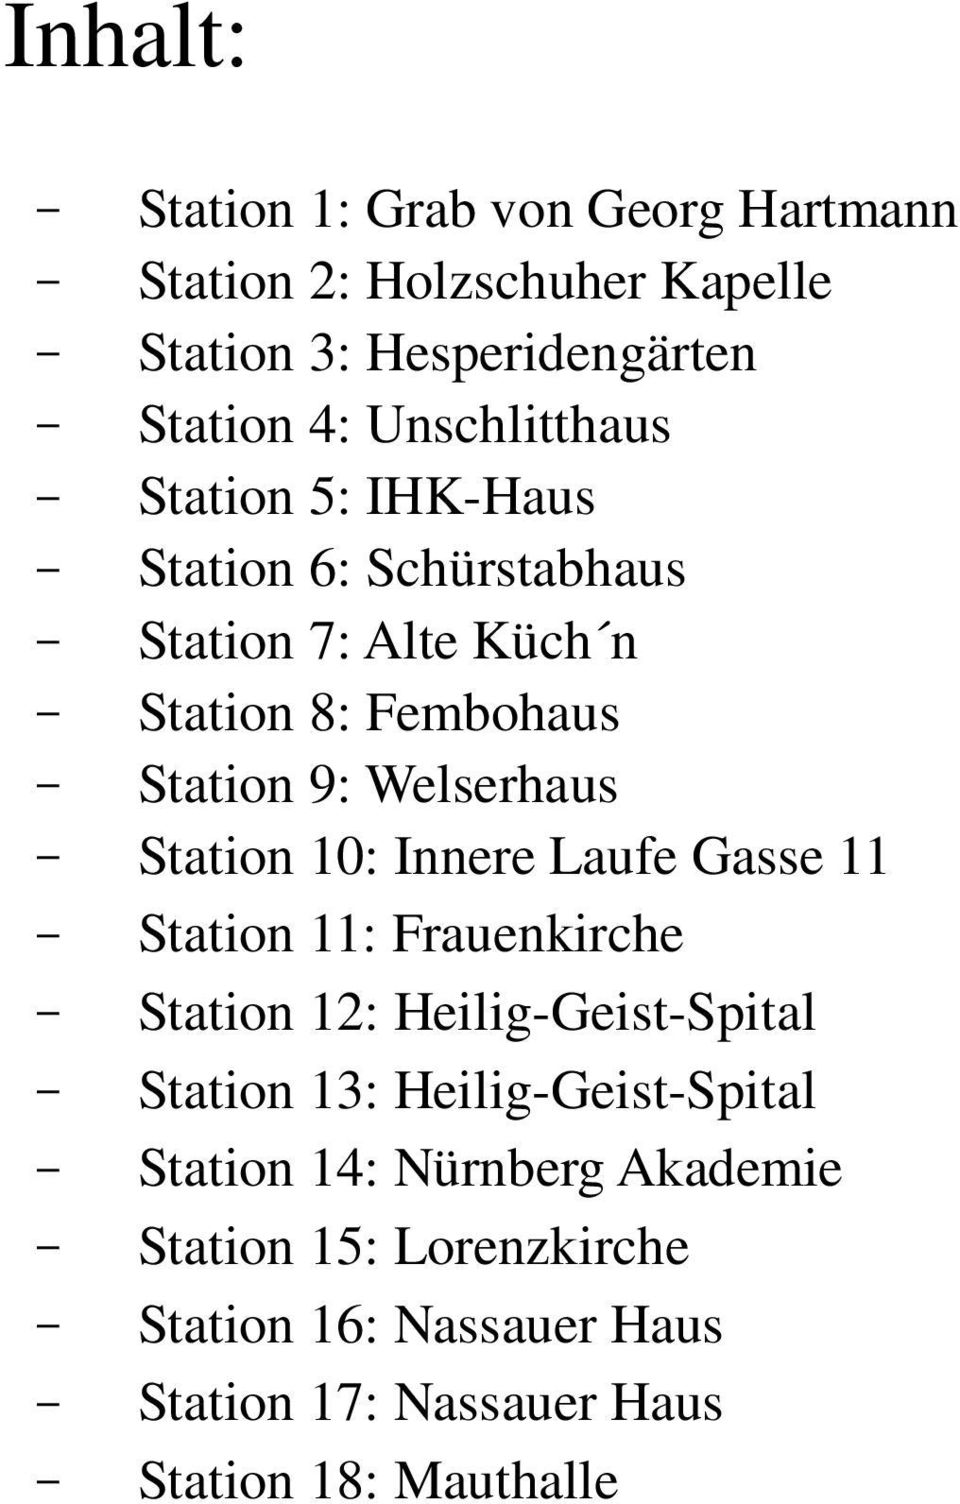 Welserhaus Station 10: Innere Laufe Gasse 11 Station 11: Frauenkirche Station 12: Heilig-Geist-Spital Station 13: